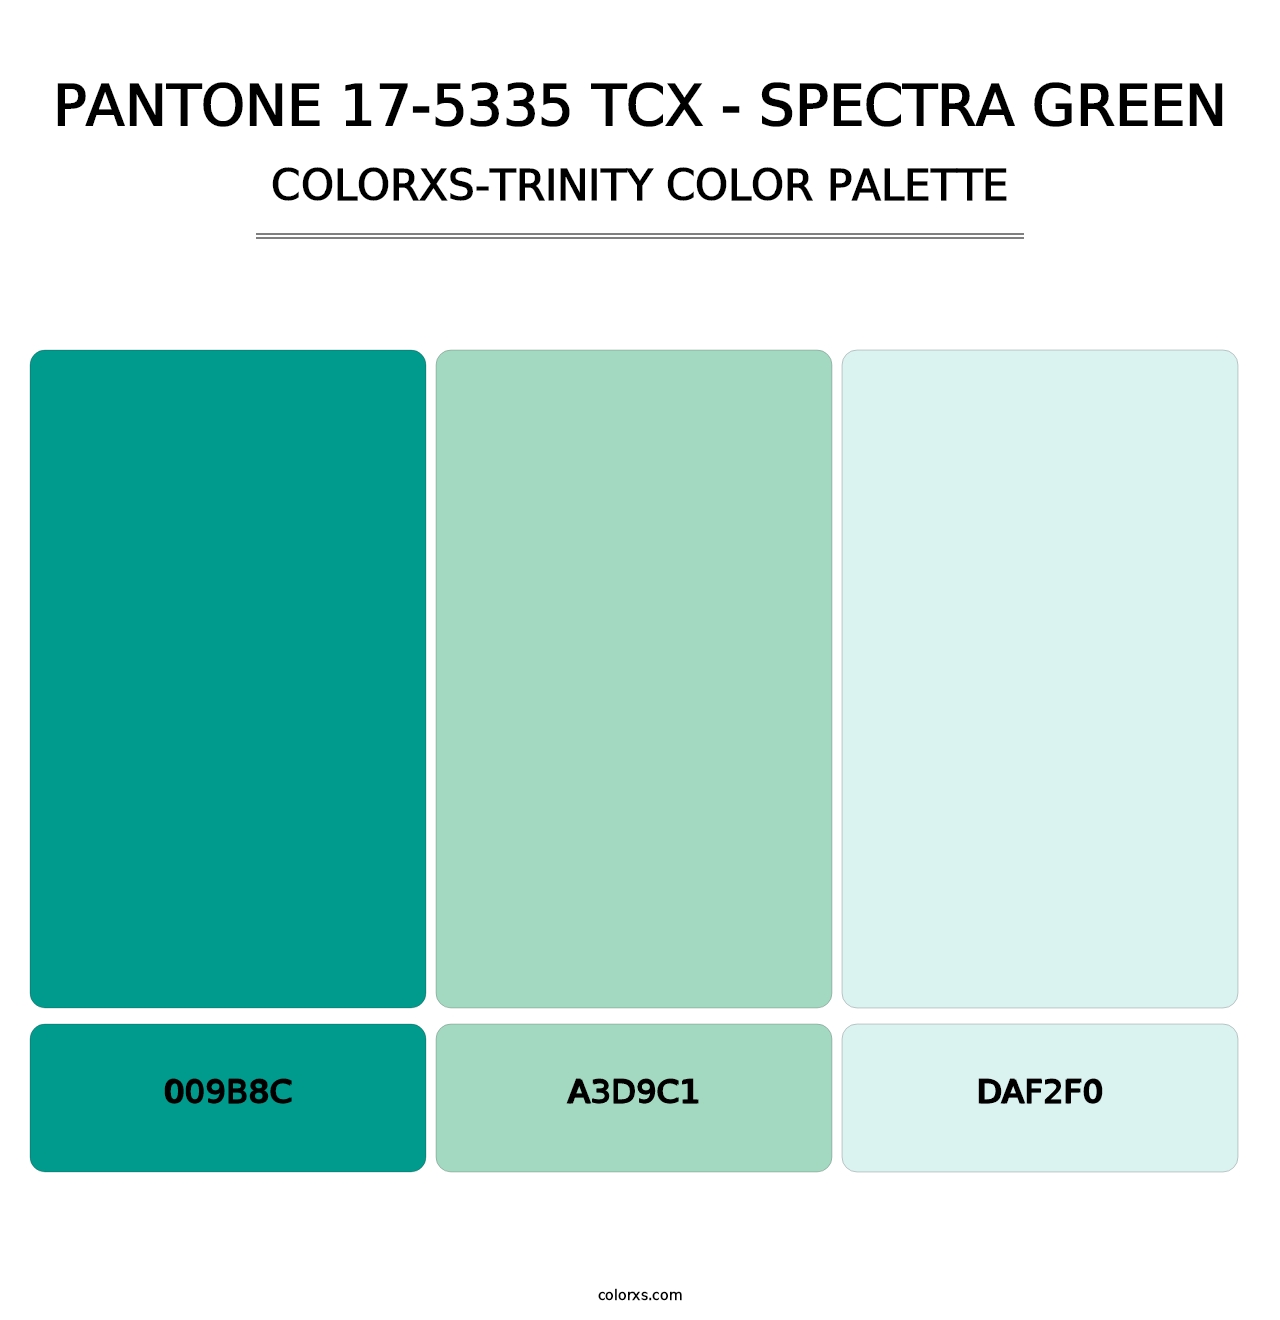 PANTONE 17-5335 TCX - Spectra Green - Colorxs Trinity Palette